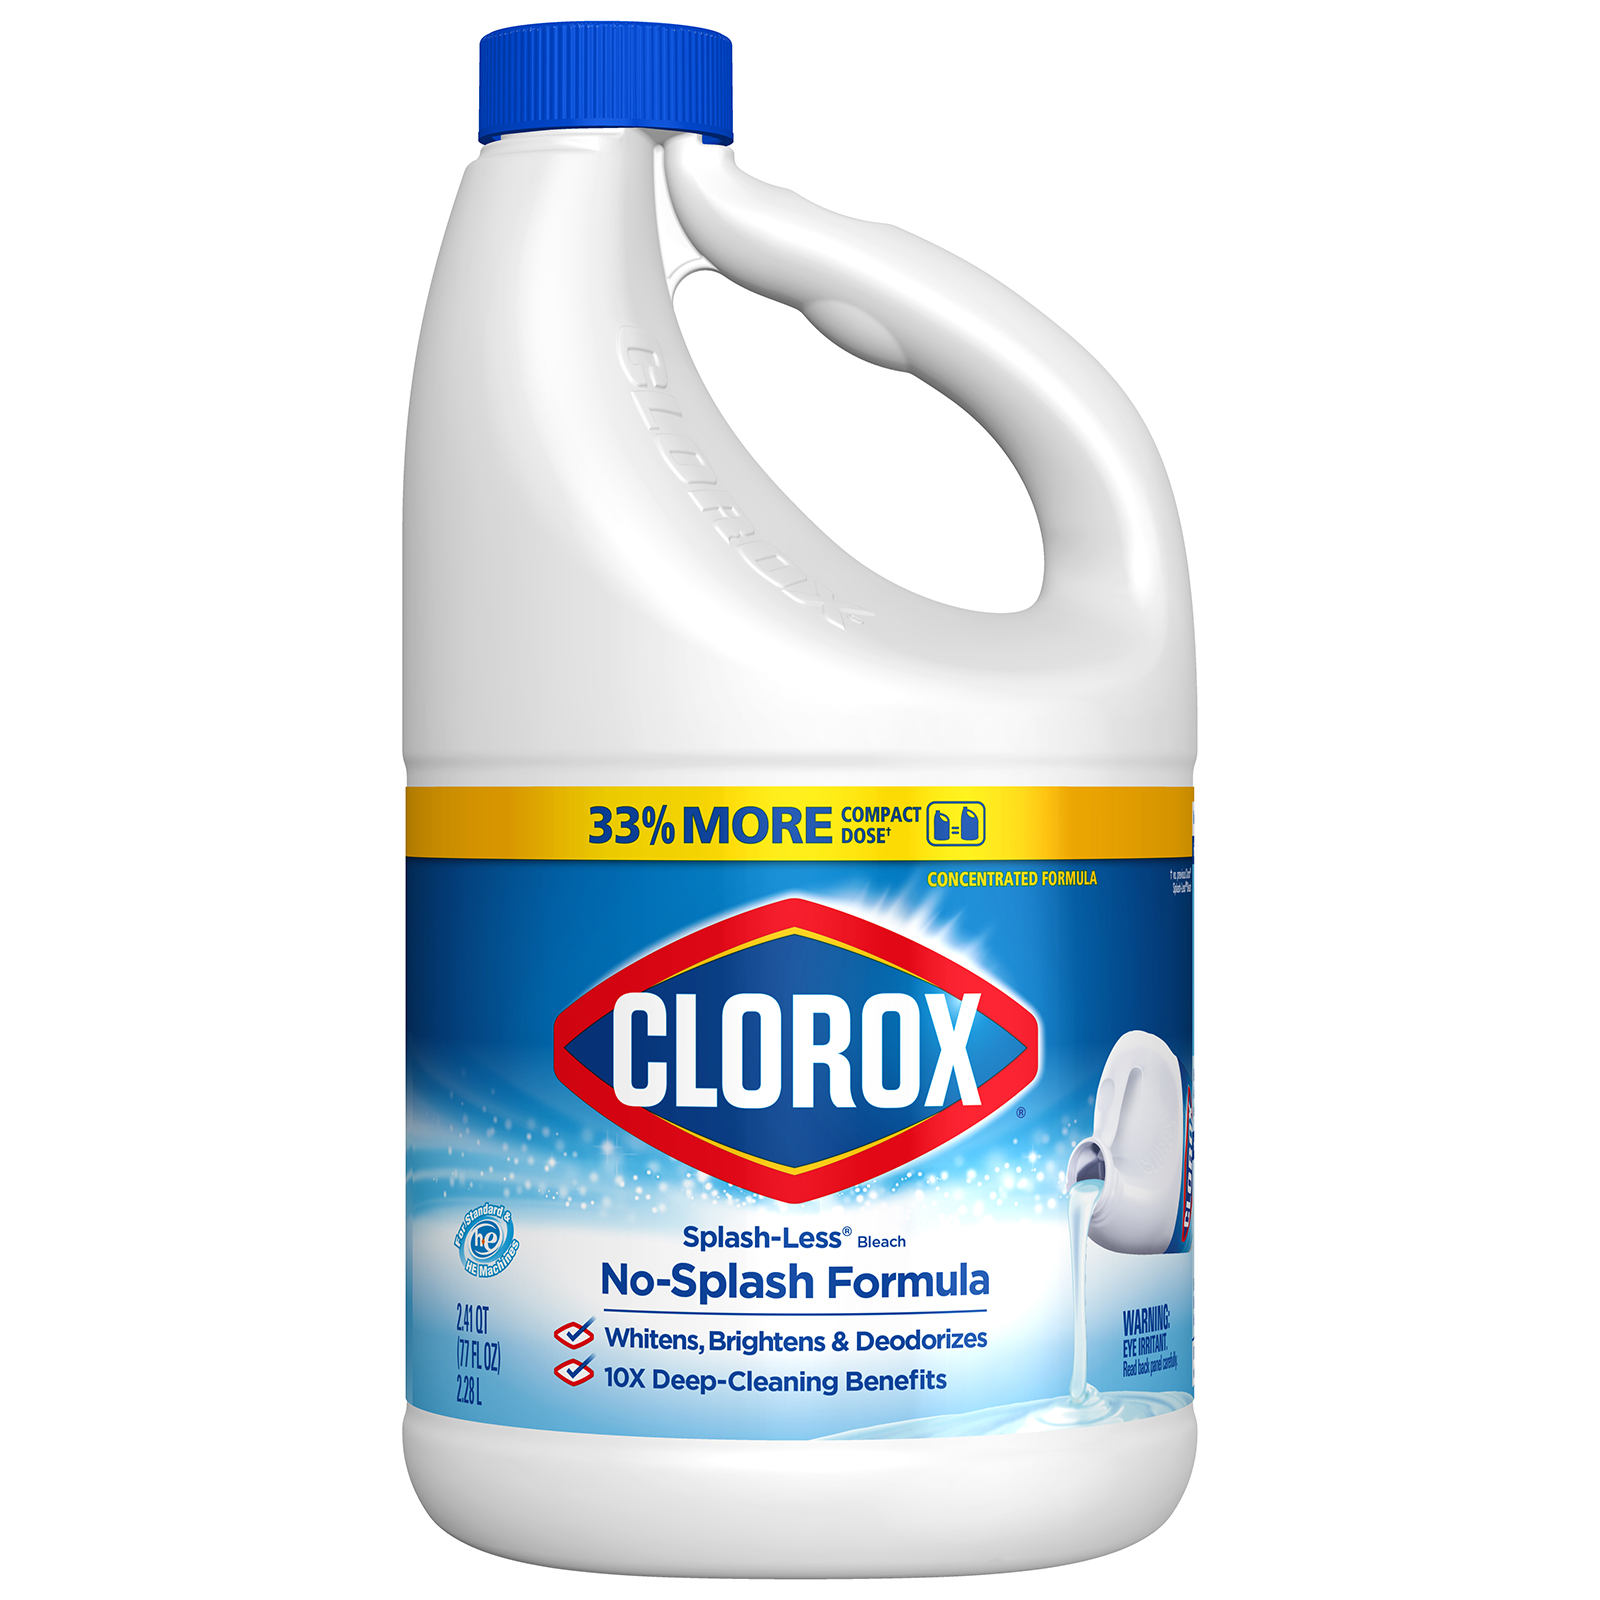 Clorox Splash-Less Concentrated Regular Bleach 77 fl oz